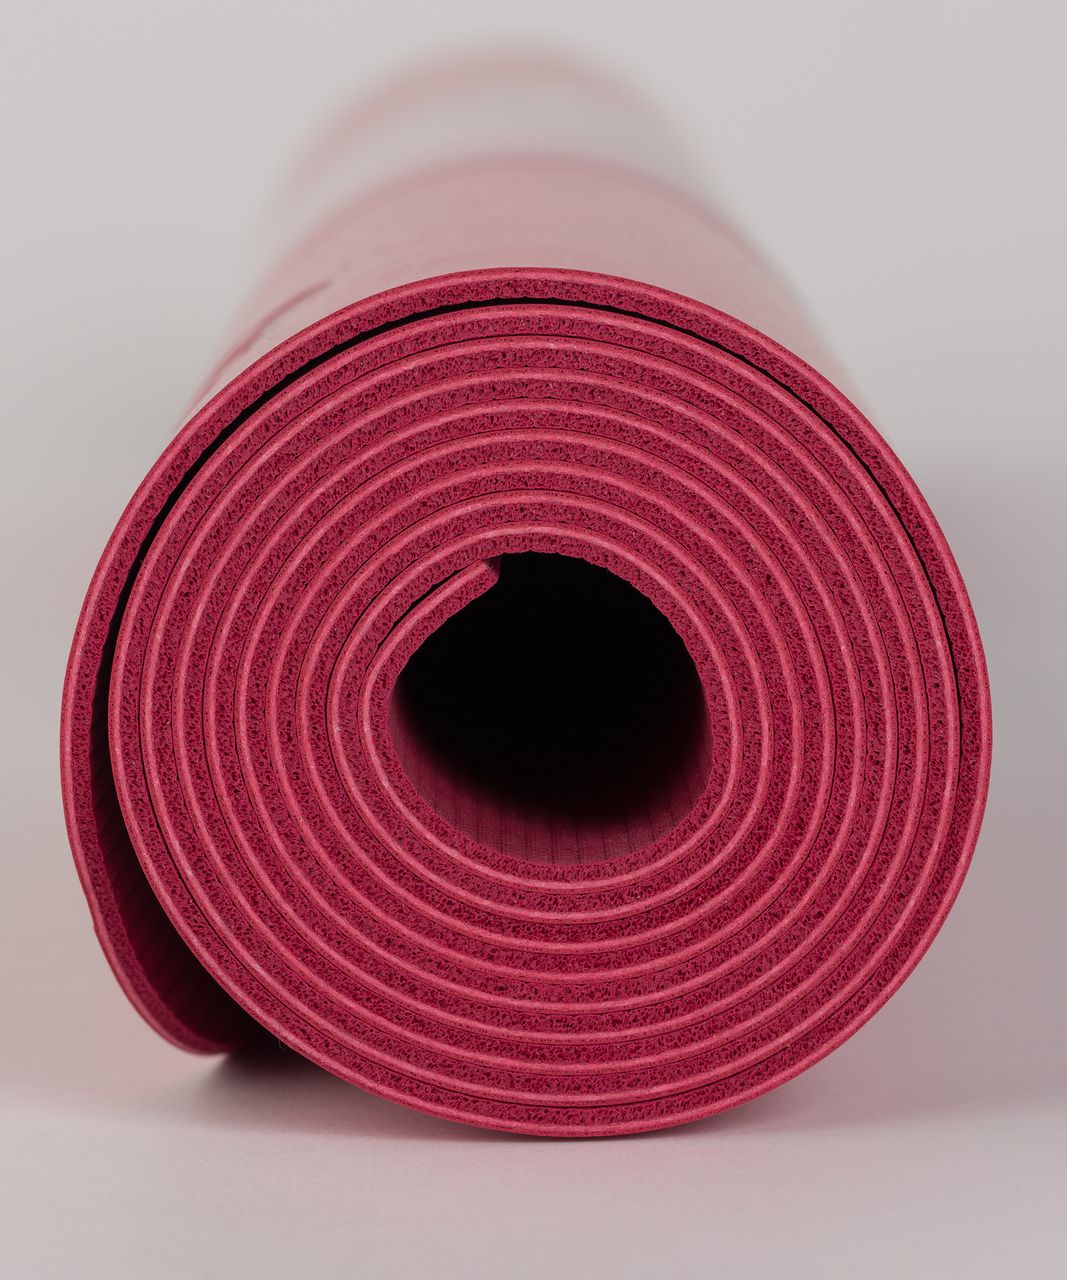 Lululemon 5mm Yoga Mat Red